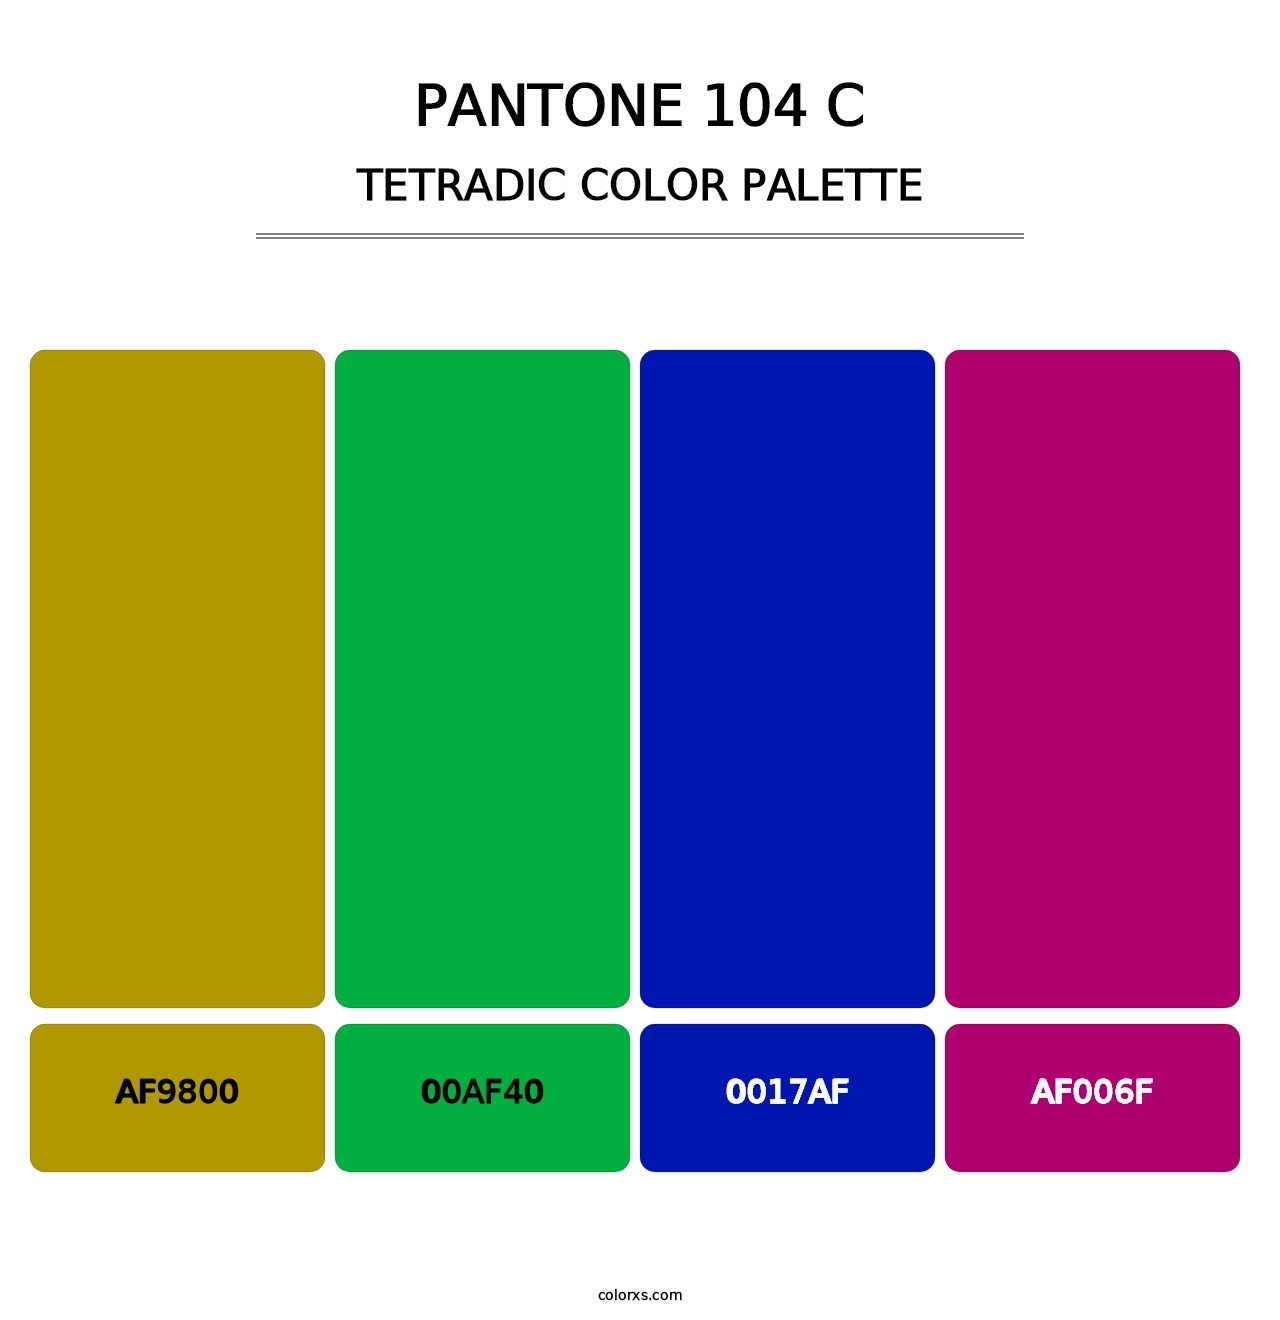 PANTONE 104 C - Tetradic Color Palette